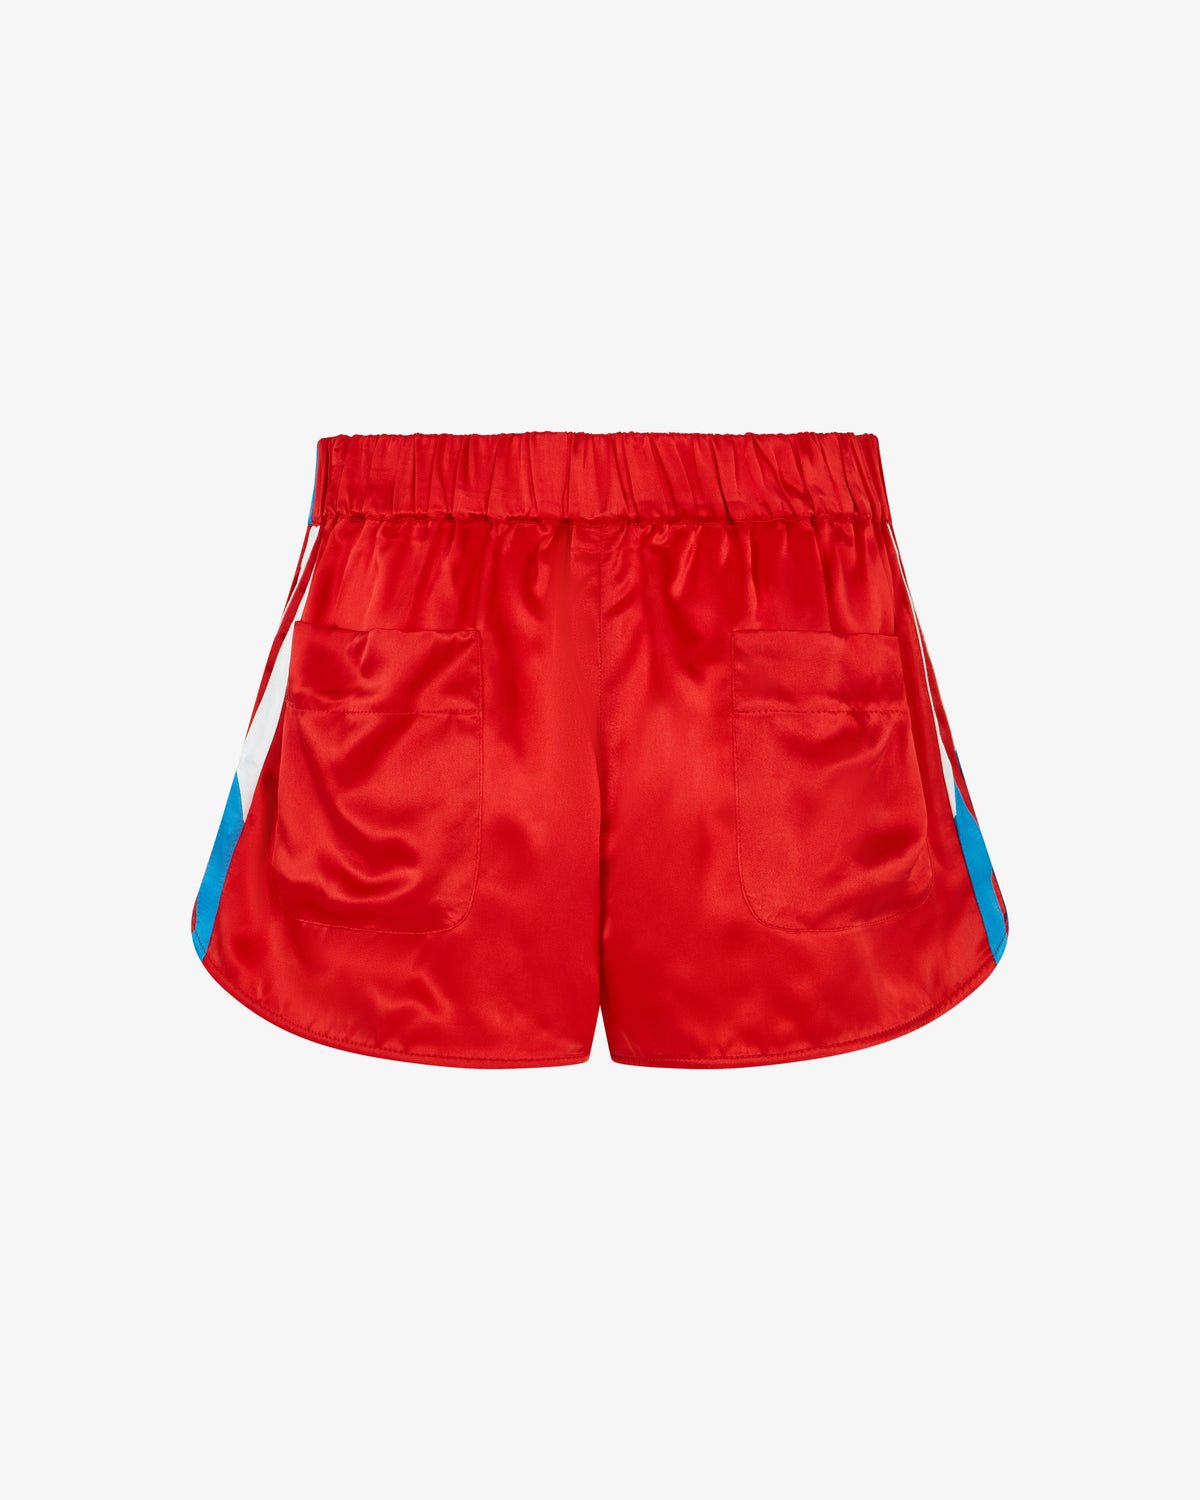 Satin Racer Shorts - Retro Red